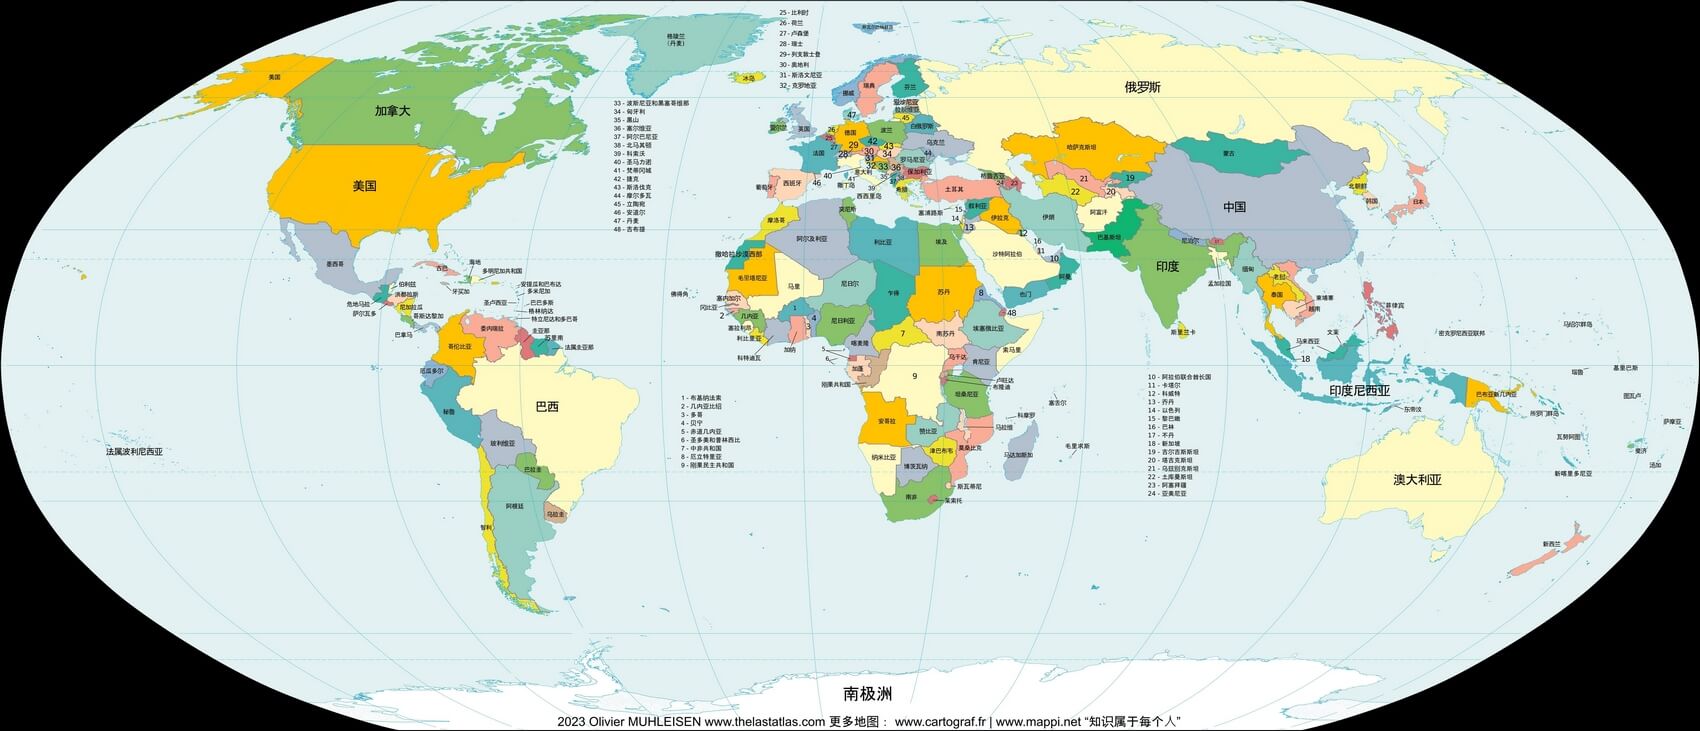 Carte monde avec pays